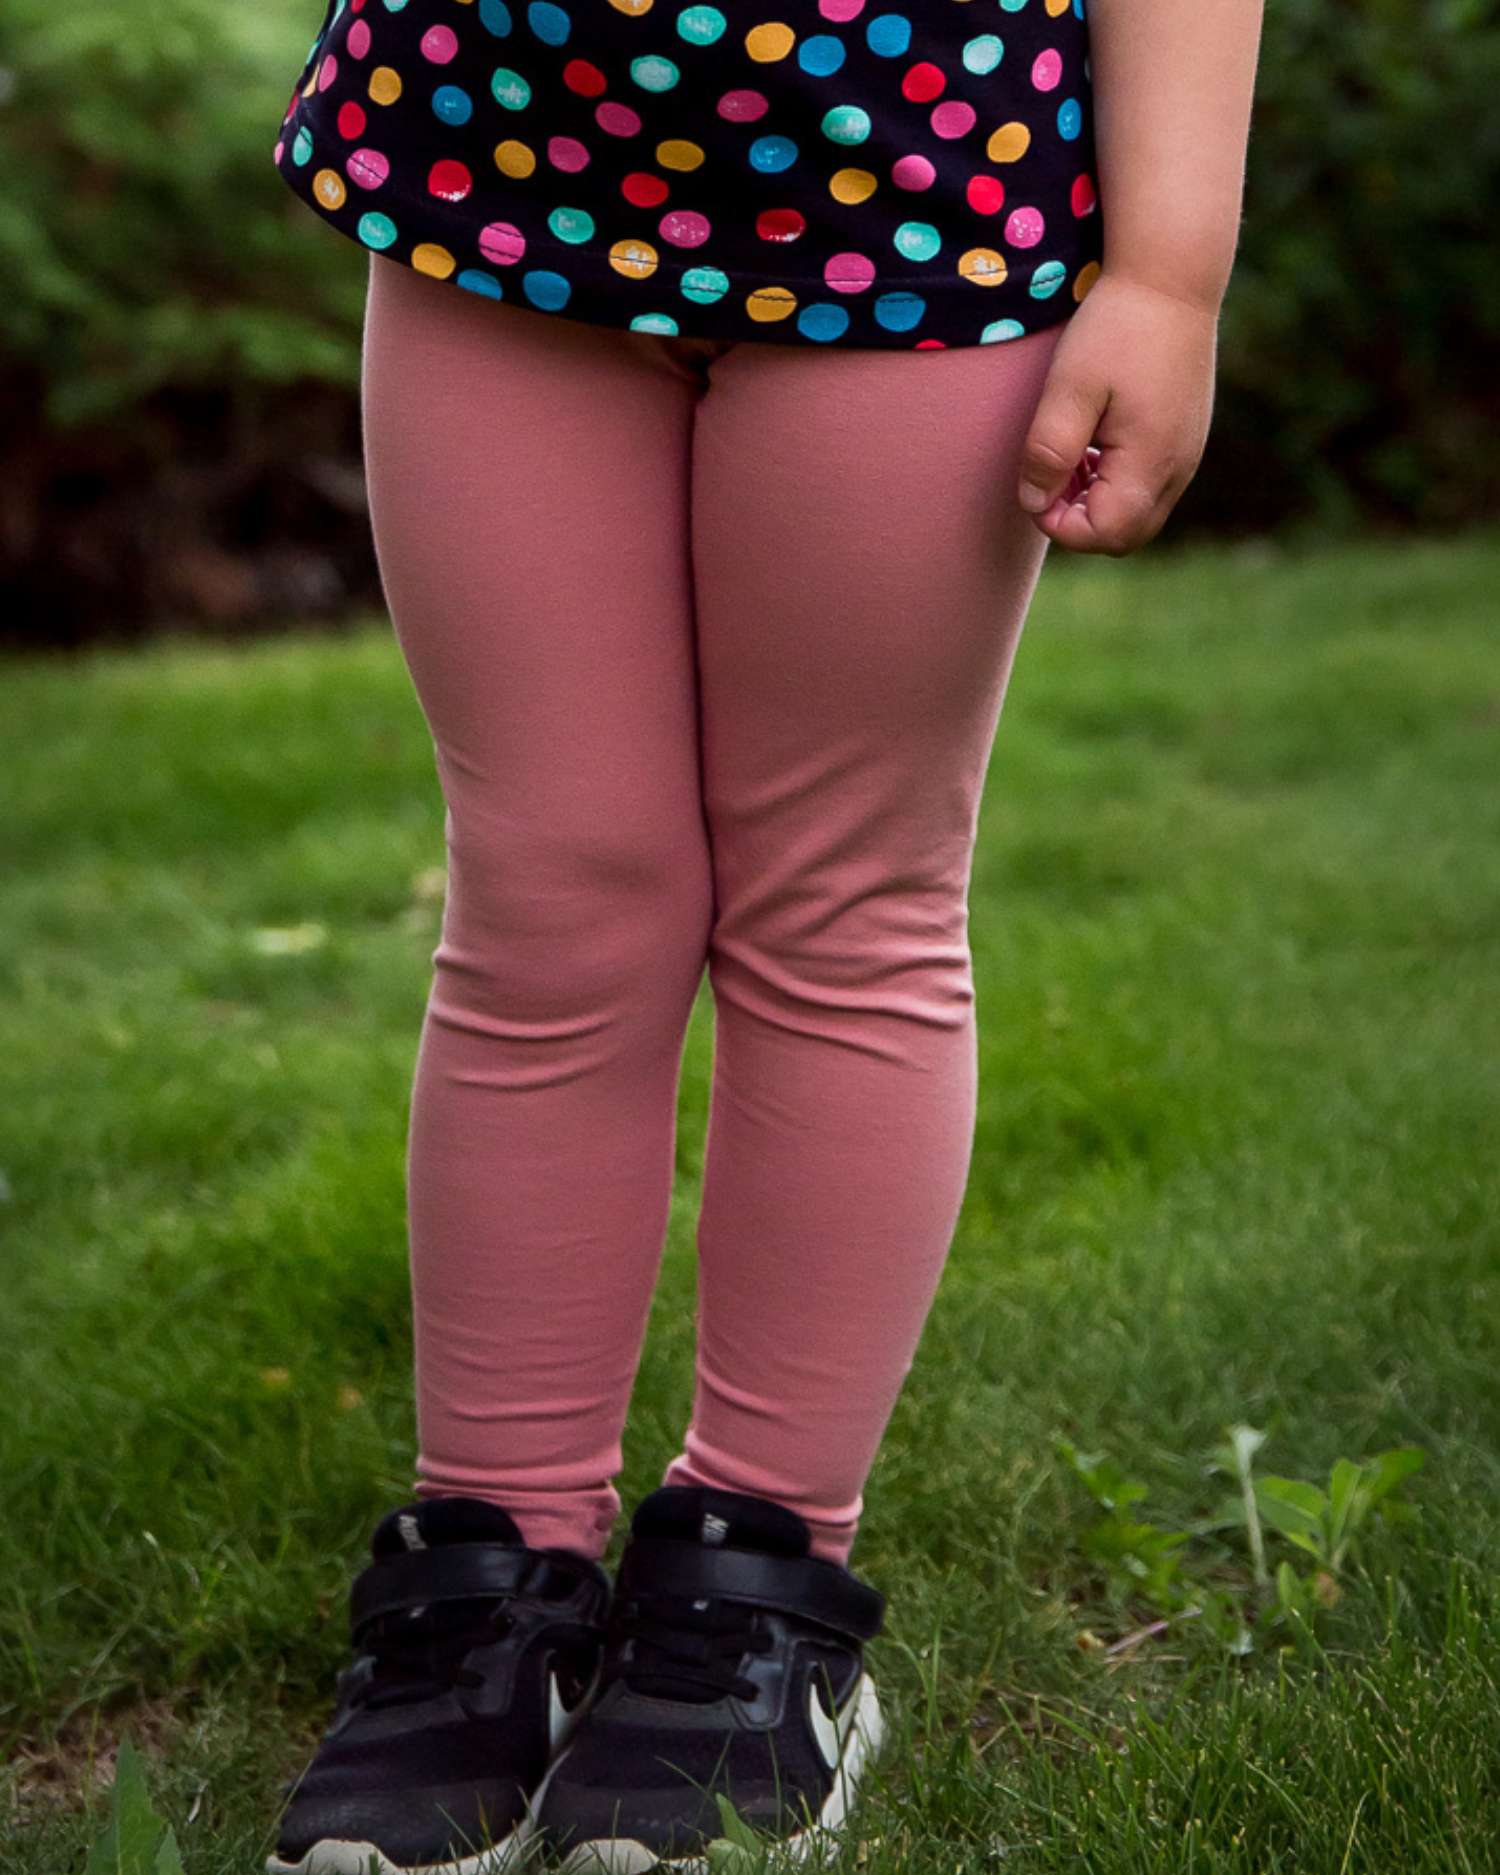 Children's leggings, blue with polka dots